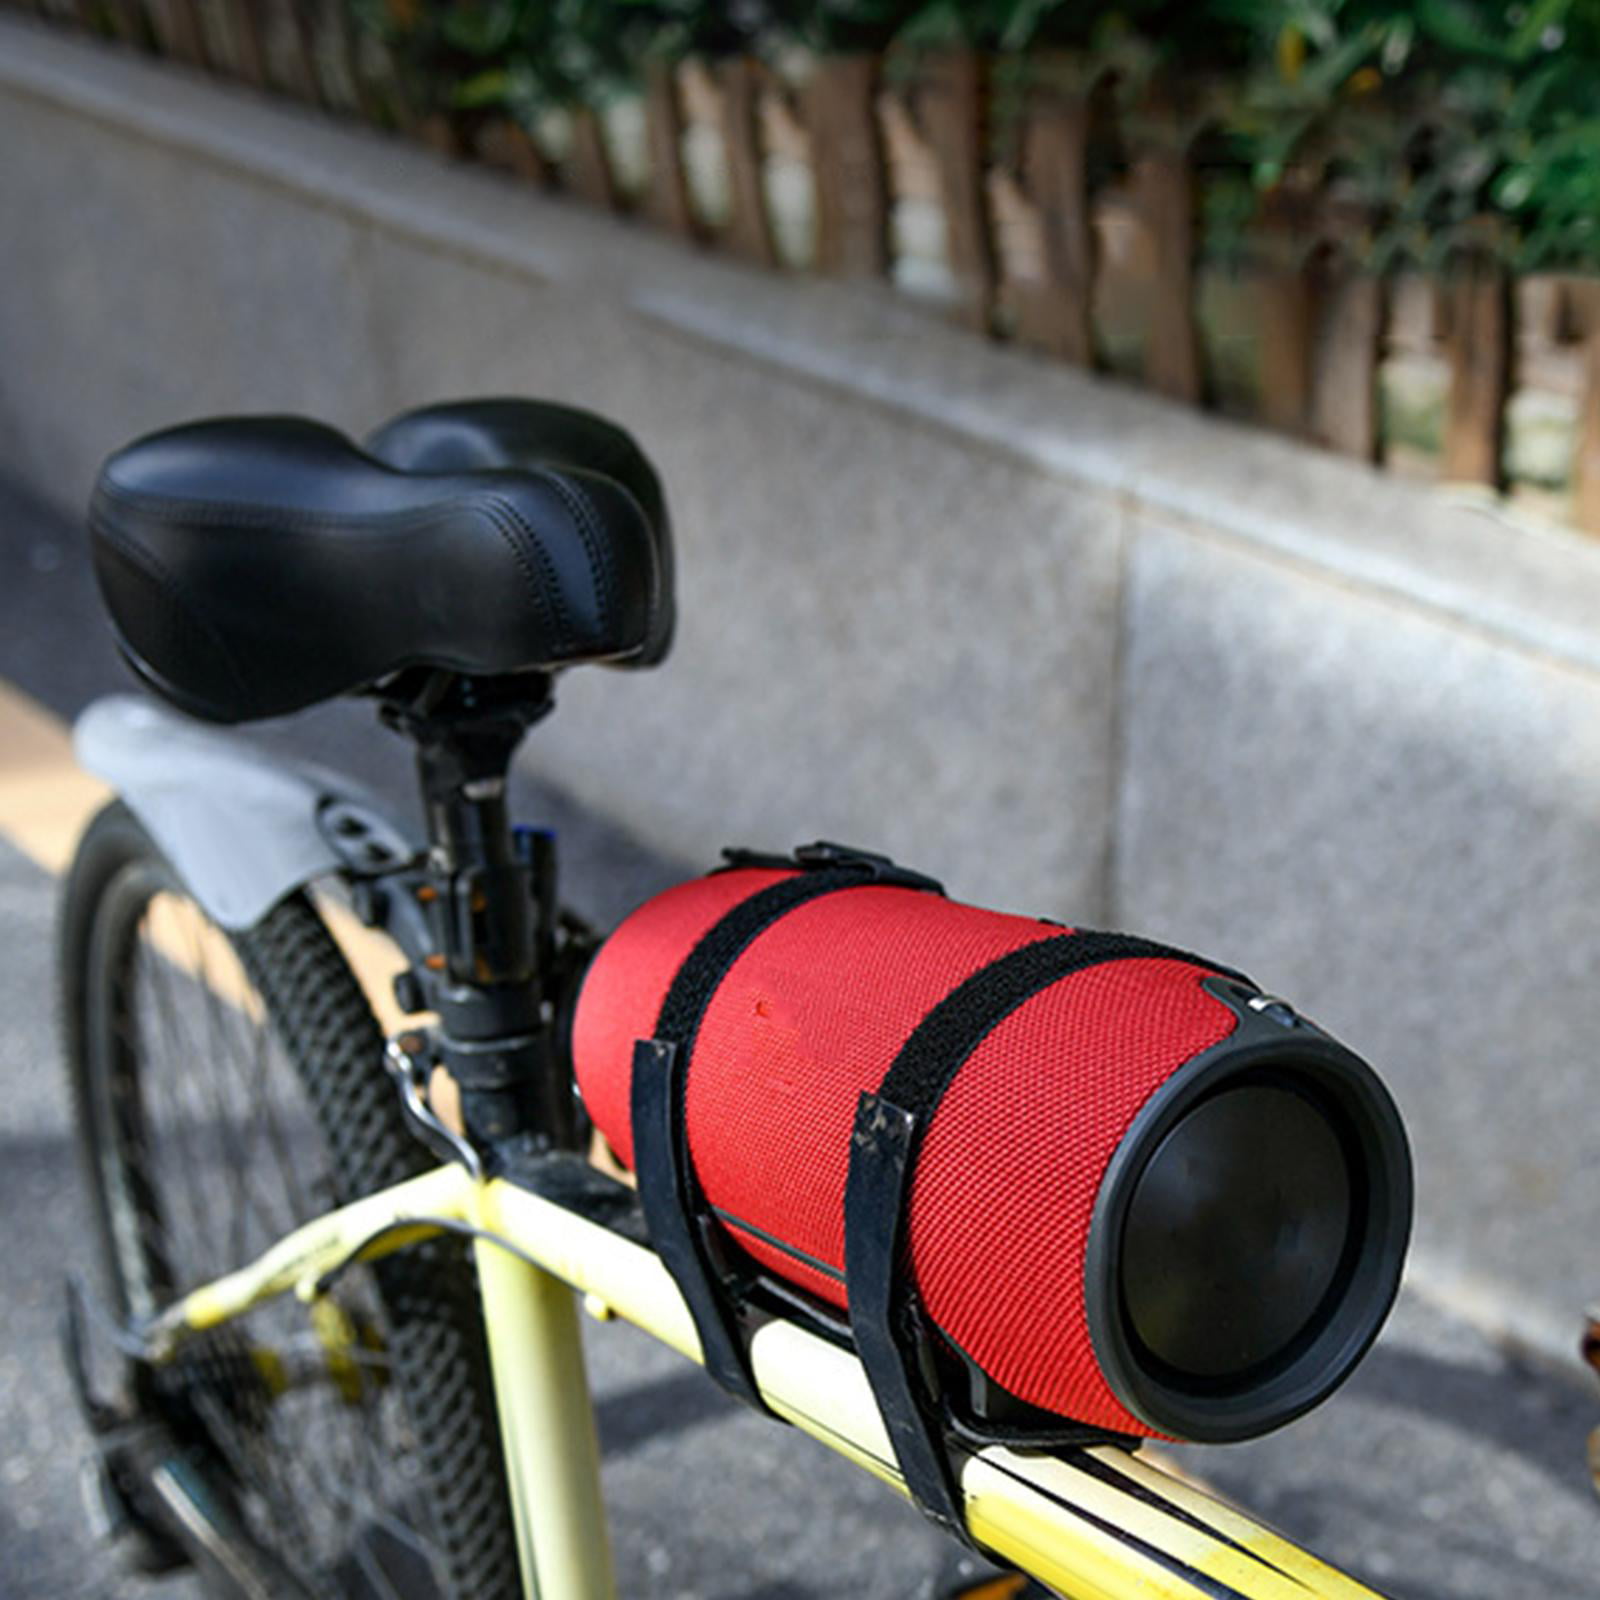 Dropship Bluetooth Speaker Mount Bike Adjustable Strap Accessories